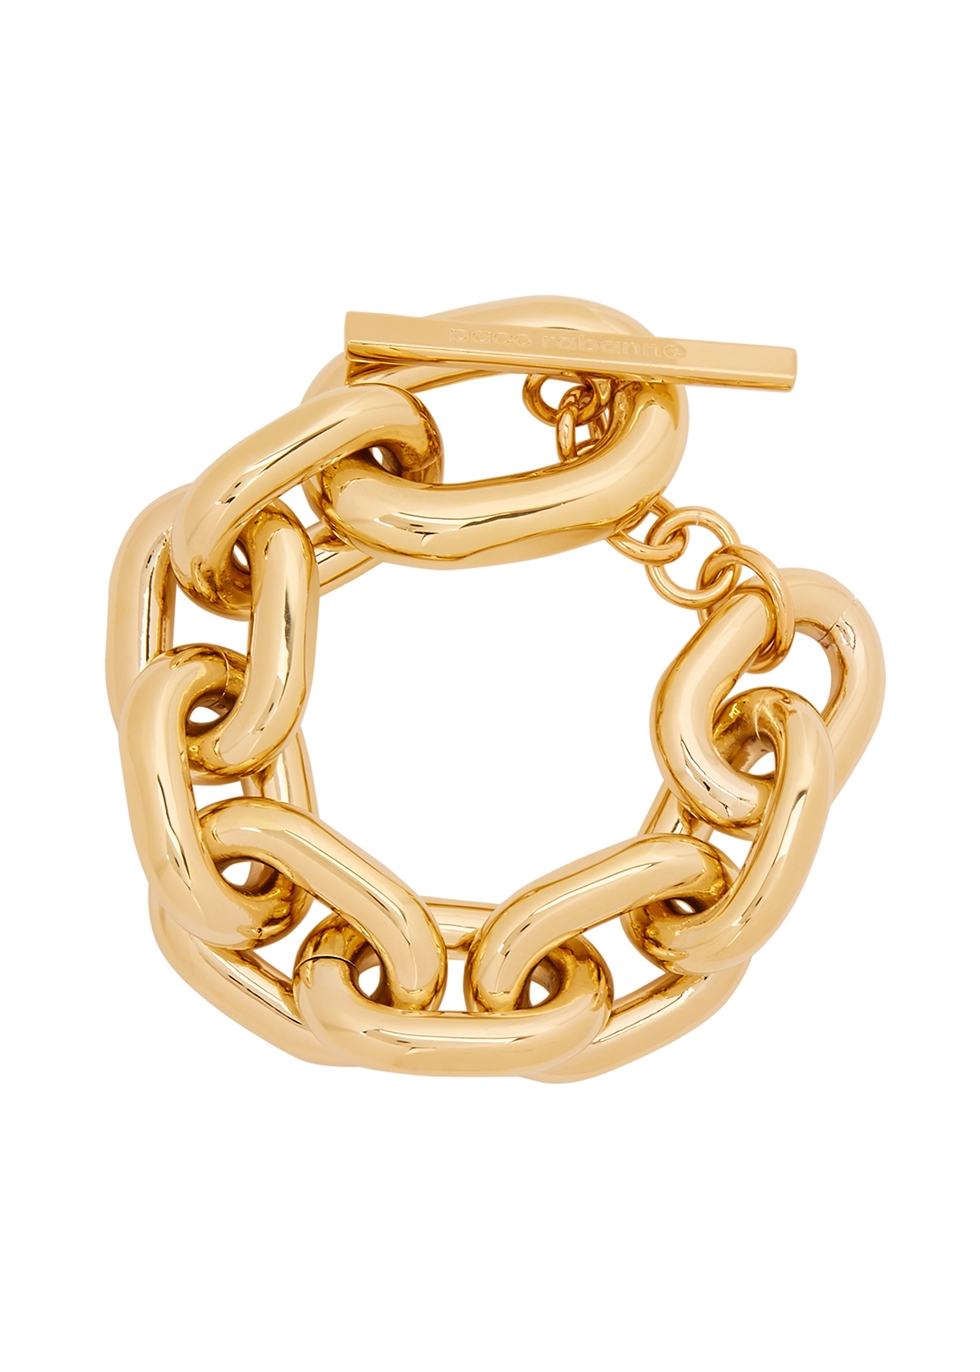 Paco Rabanne XL Link gold-tone bracelet - Harvey Nichols